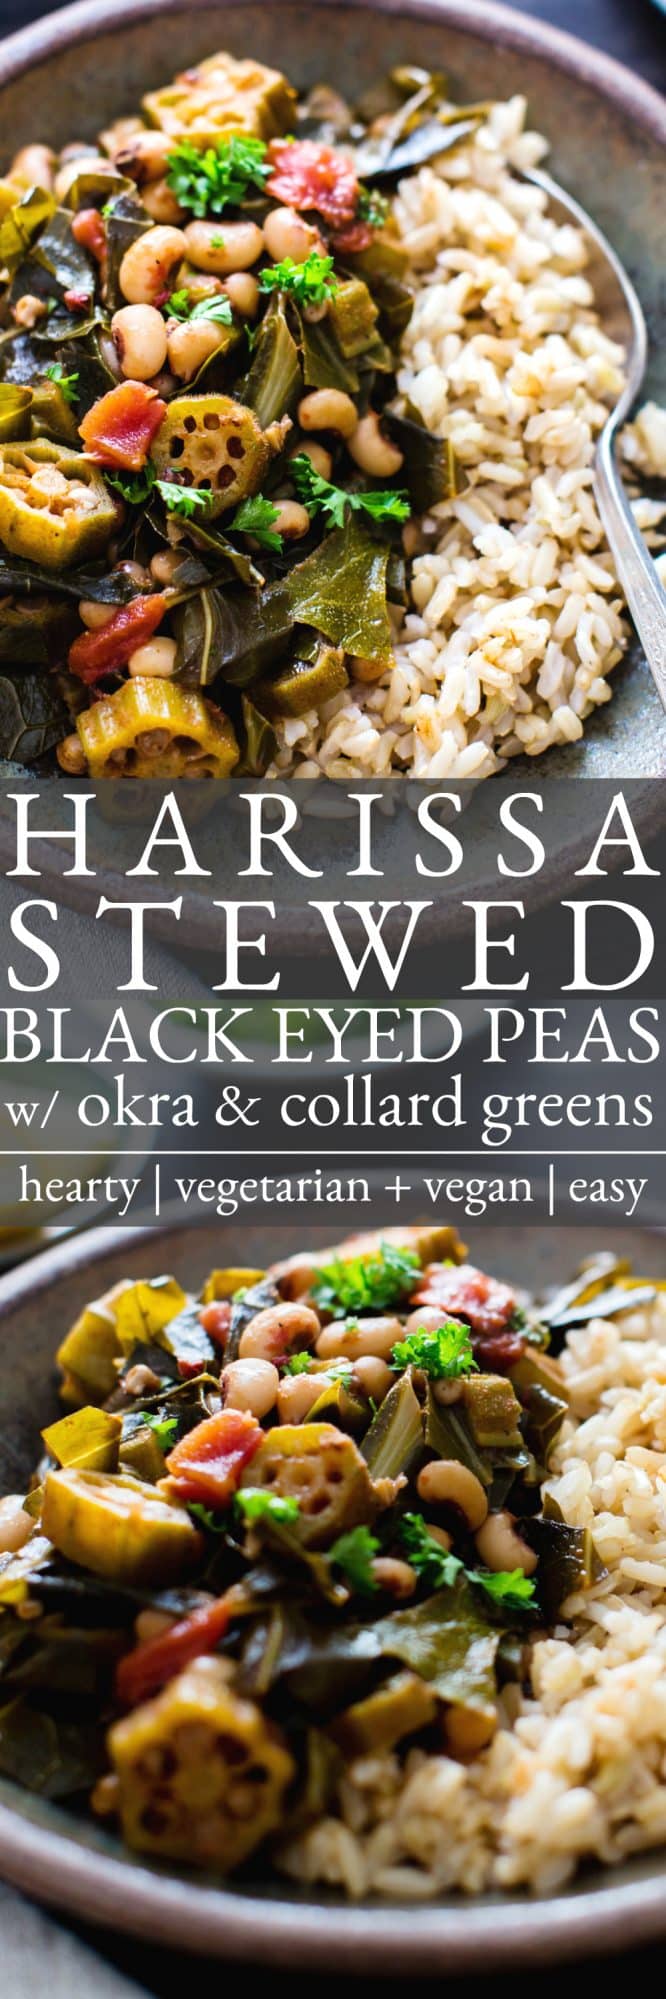 Pinterest pin for harissa stewed black eyed peas. 